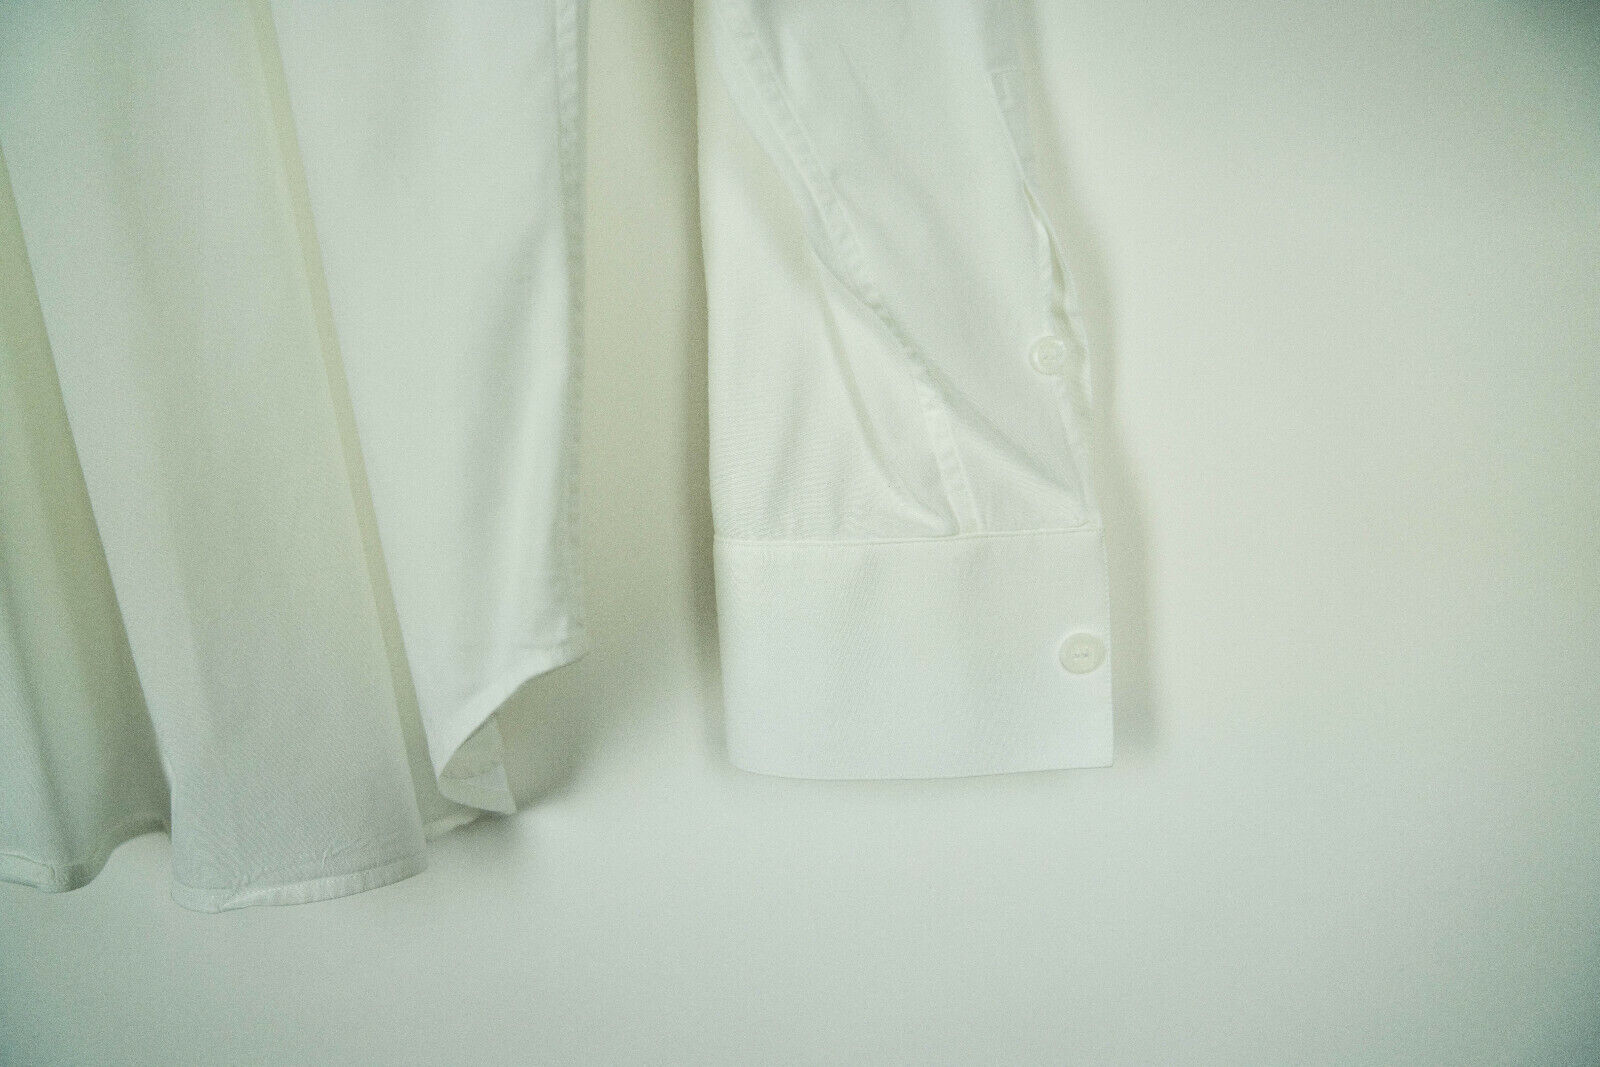 DIOR HOMME Men's White Dress Shirt Collar Solid 38 39 40 Hedi Slimane